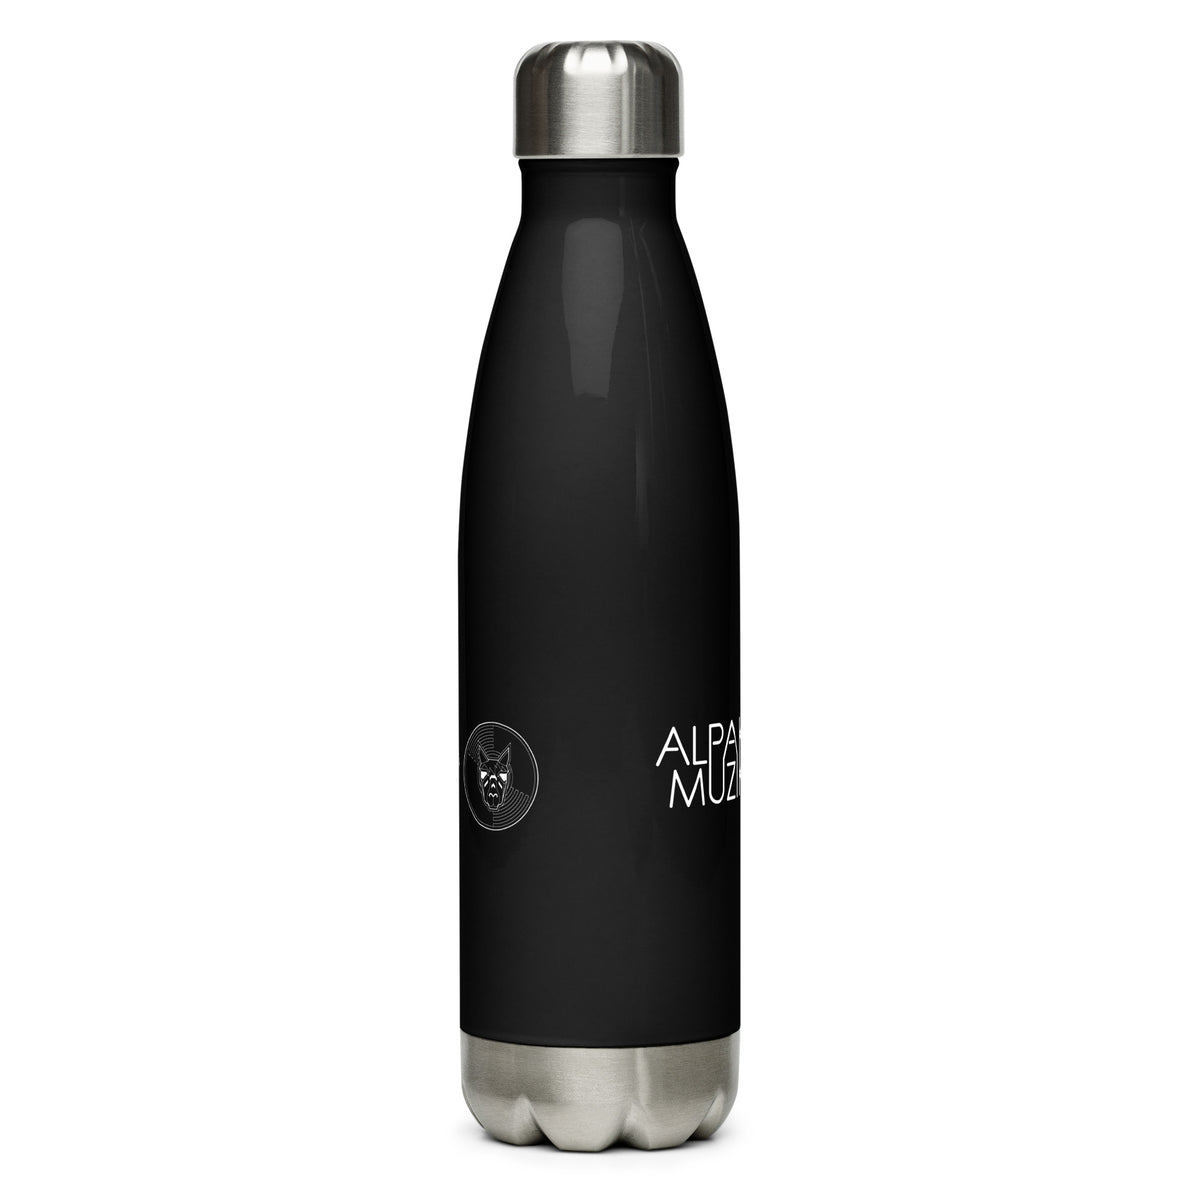 AlpaKa MuziK Stainless Steel Water Bottle